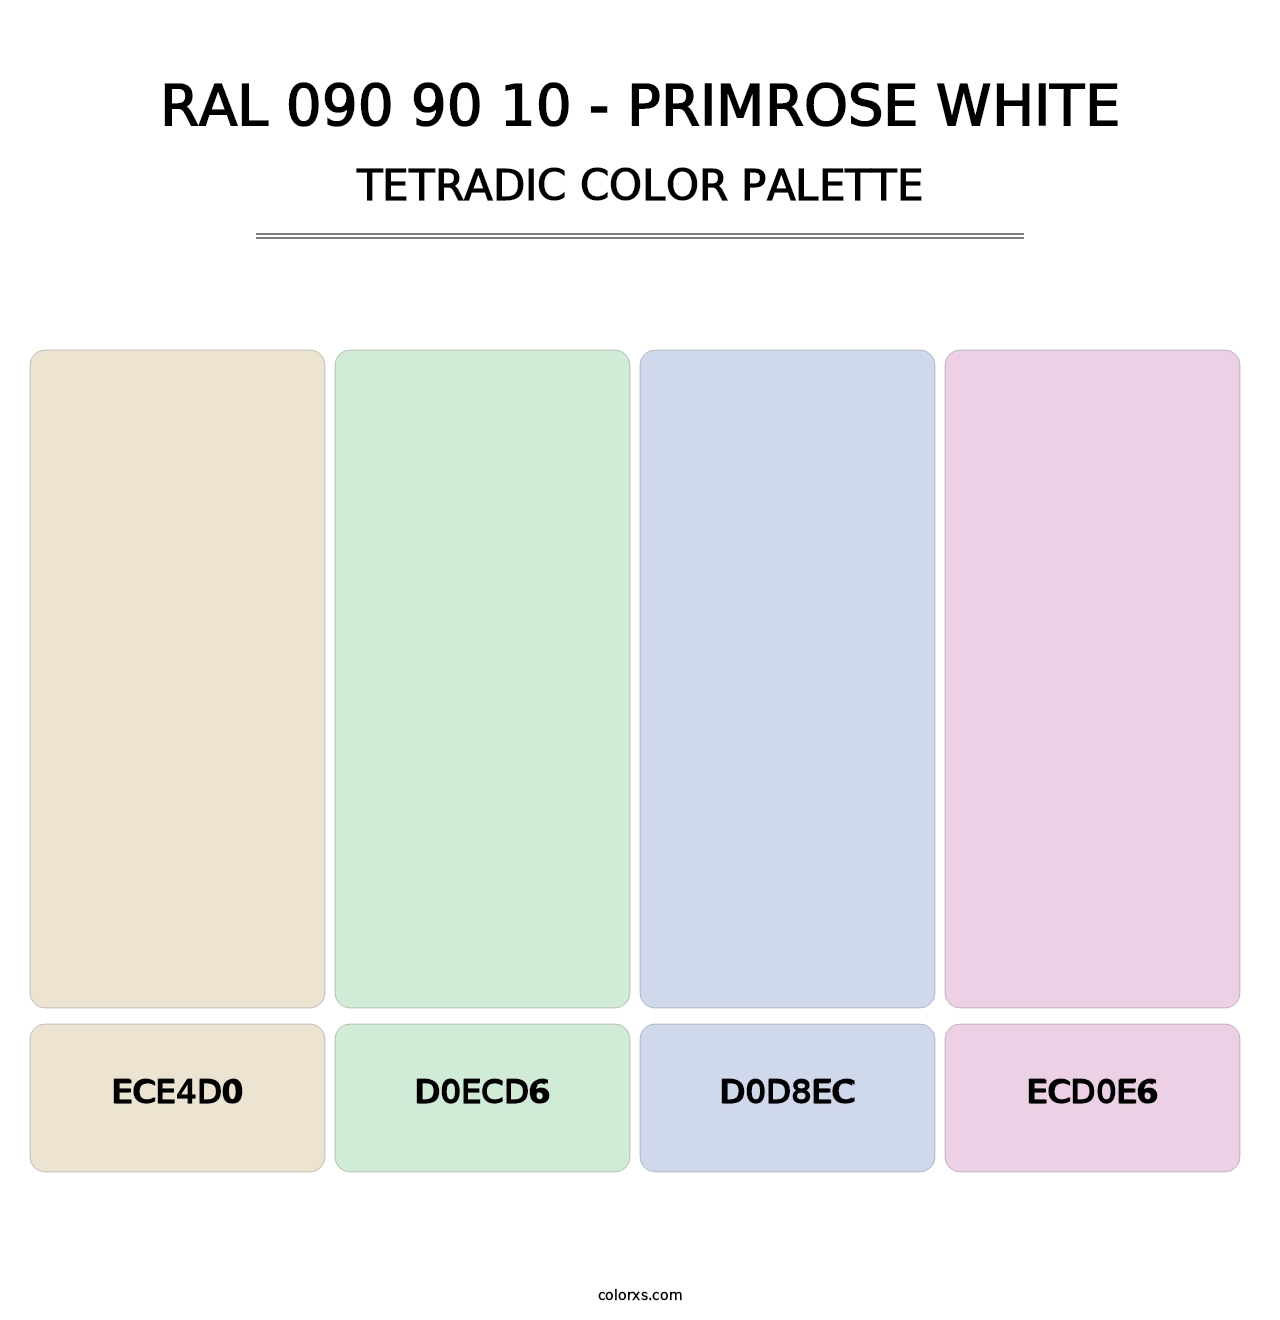 RAL 090 90 10 - Primrose White - Tetradic Color Palette